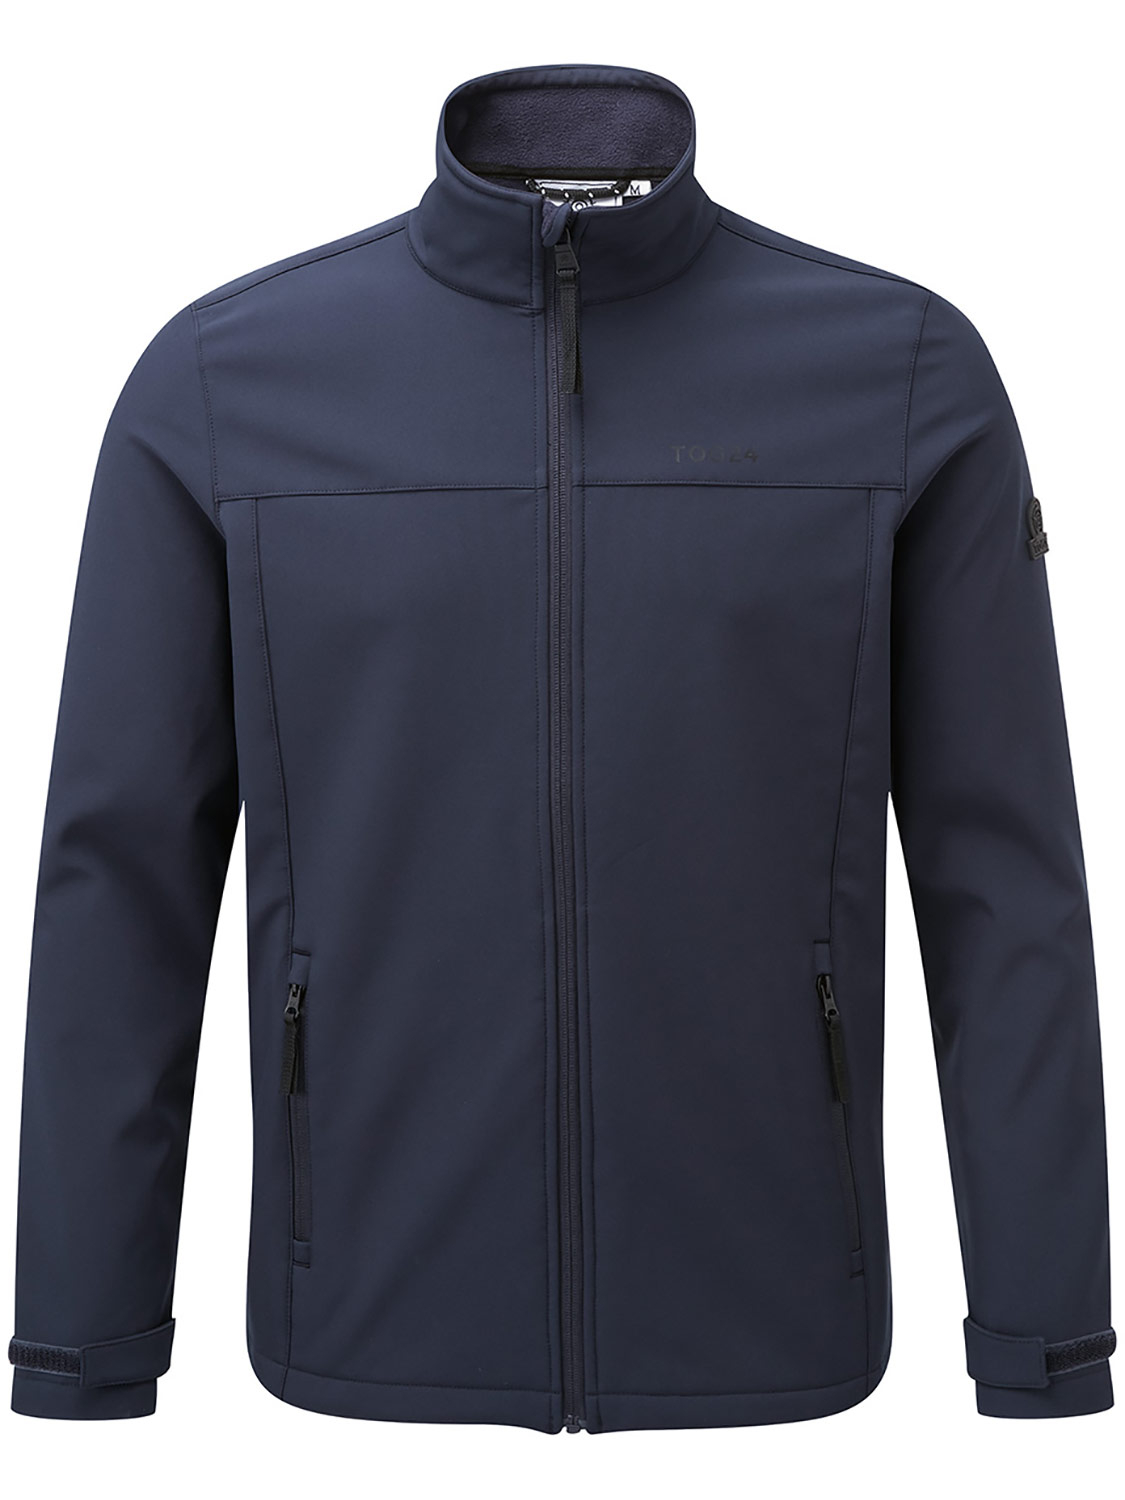 Feizor Softshell Jacket - Size: Medium Men’s Blue Tog24